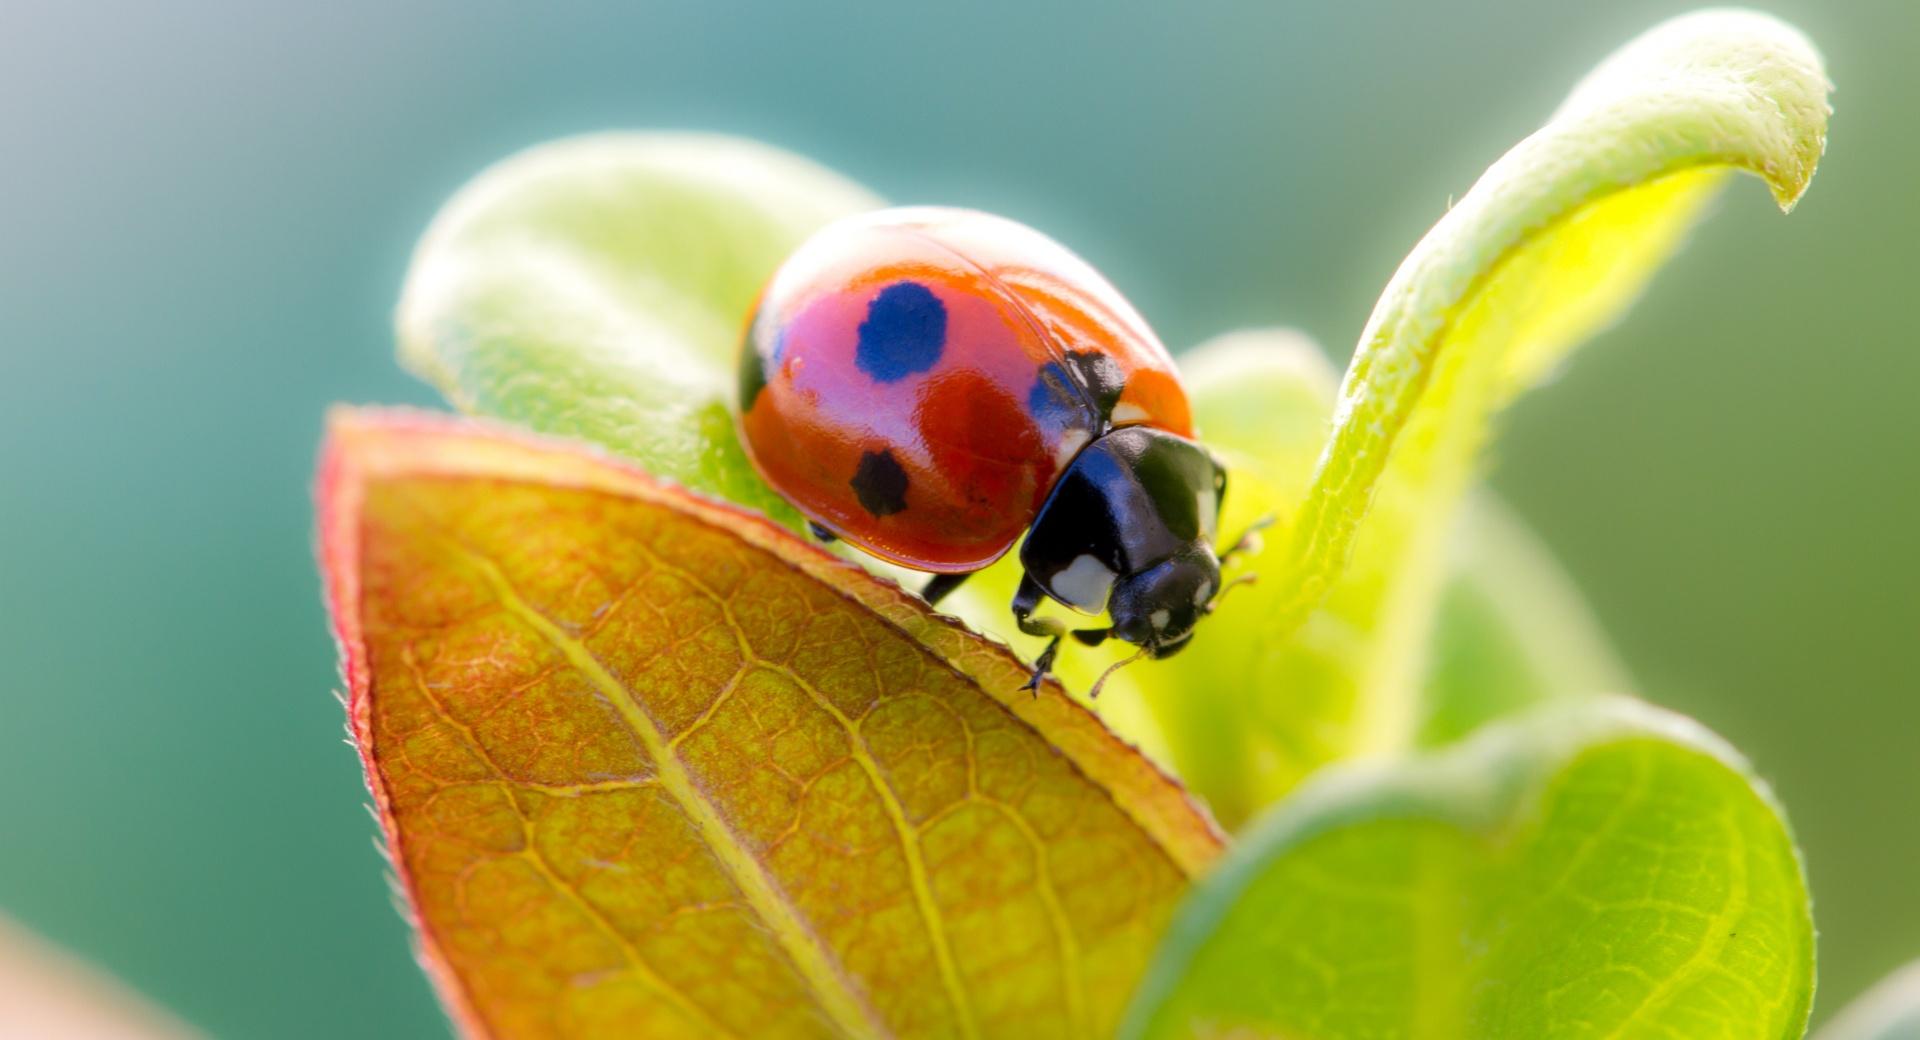 Ladybug On Leaf Top wallpapers HD quality